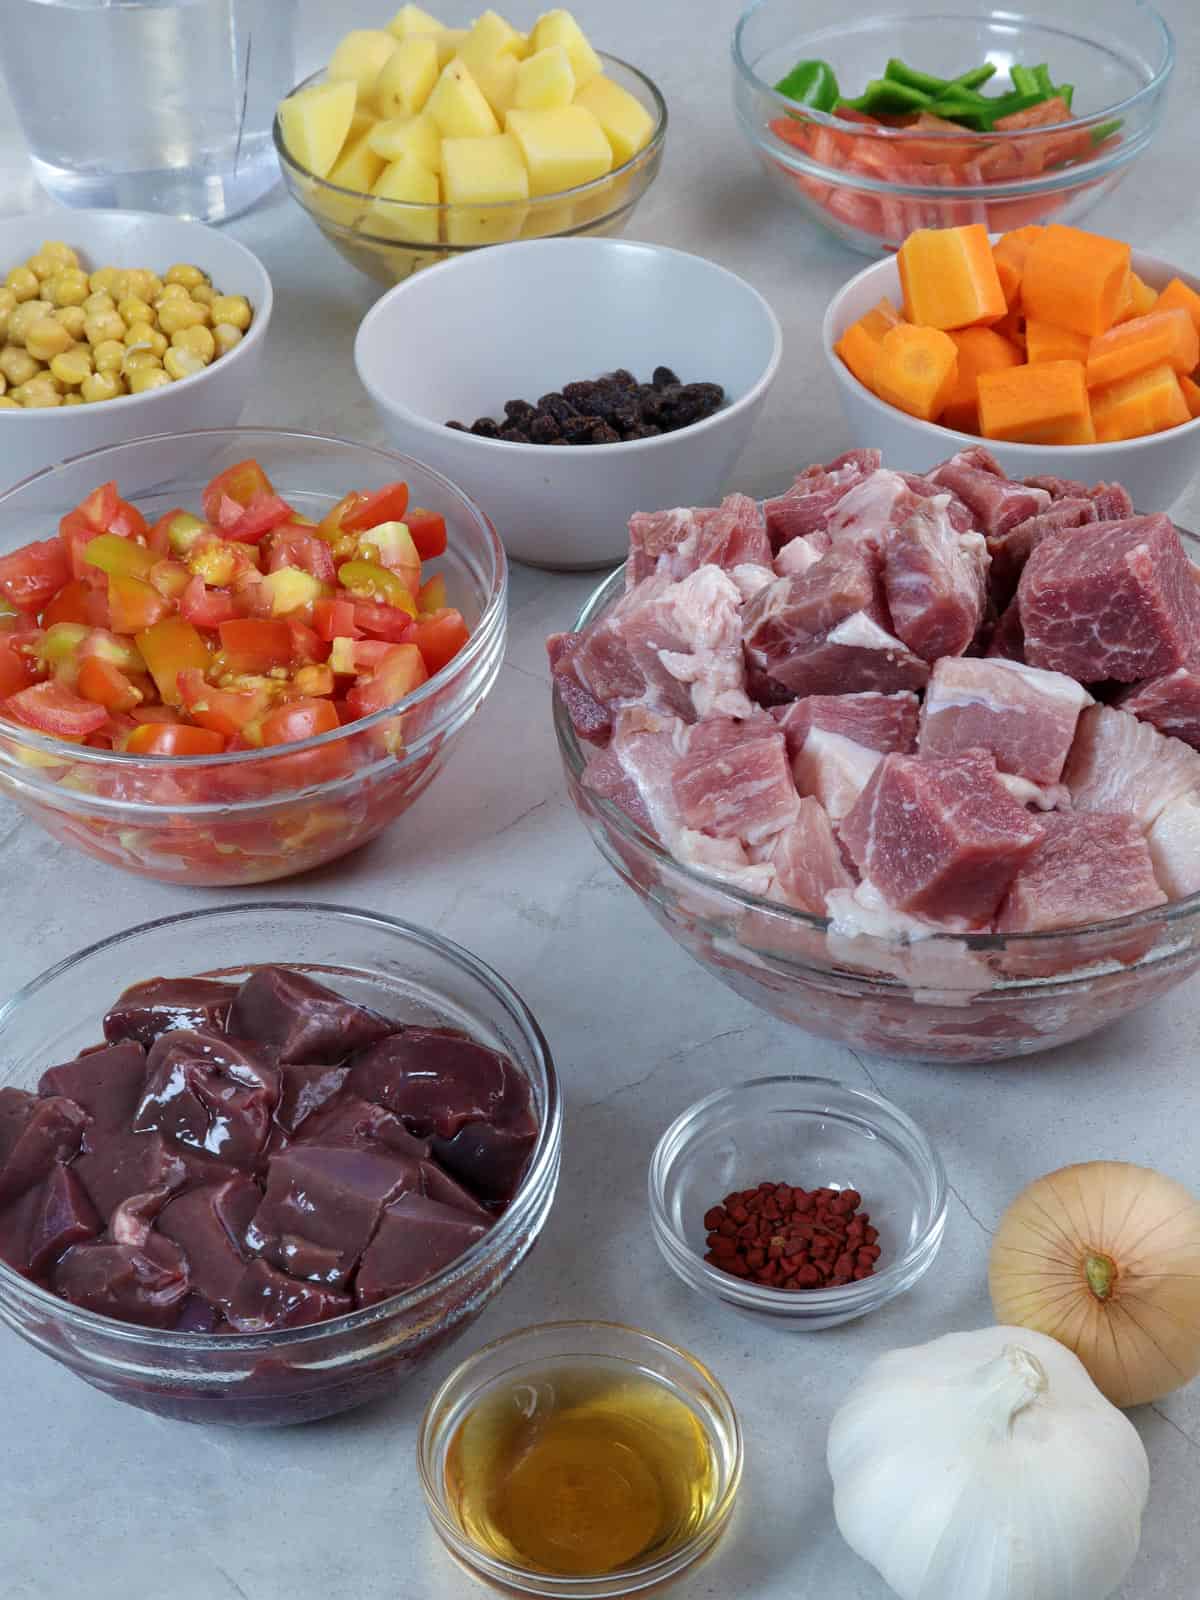 diced pork, sliced liver, fish sauce, oil, chopped tomatoes, diced carrots, onion, garlic, dicedpotatoes, garbanzo beans, raisins in individual bowls